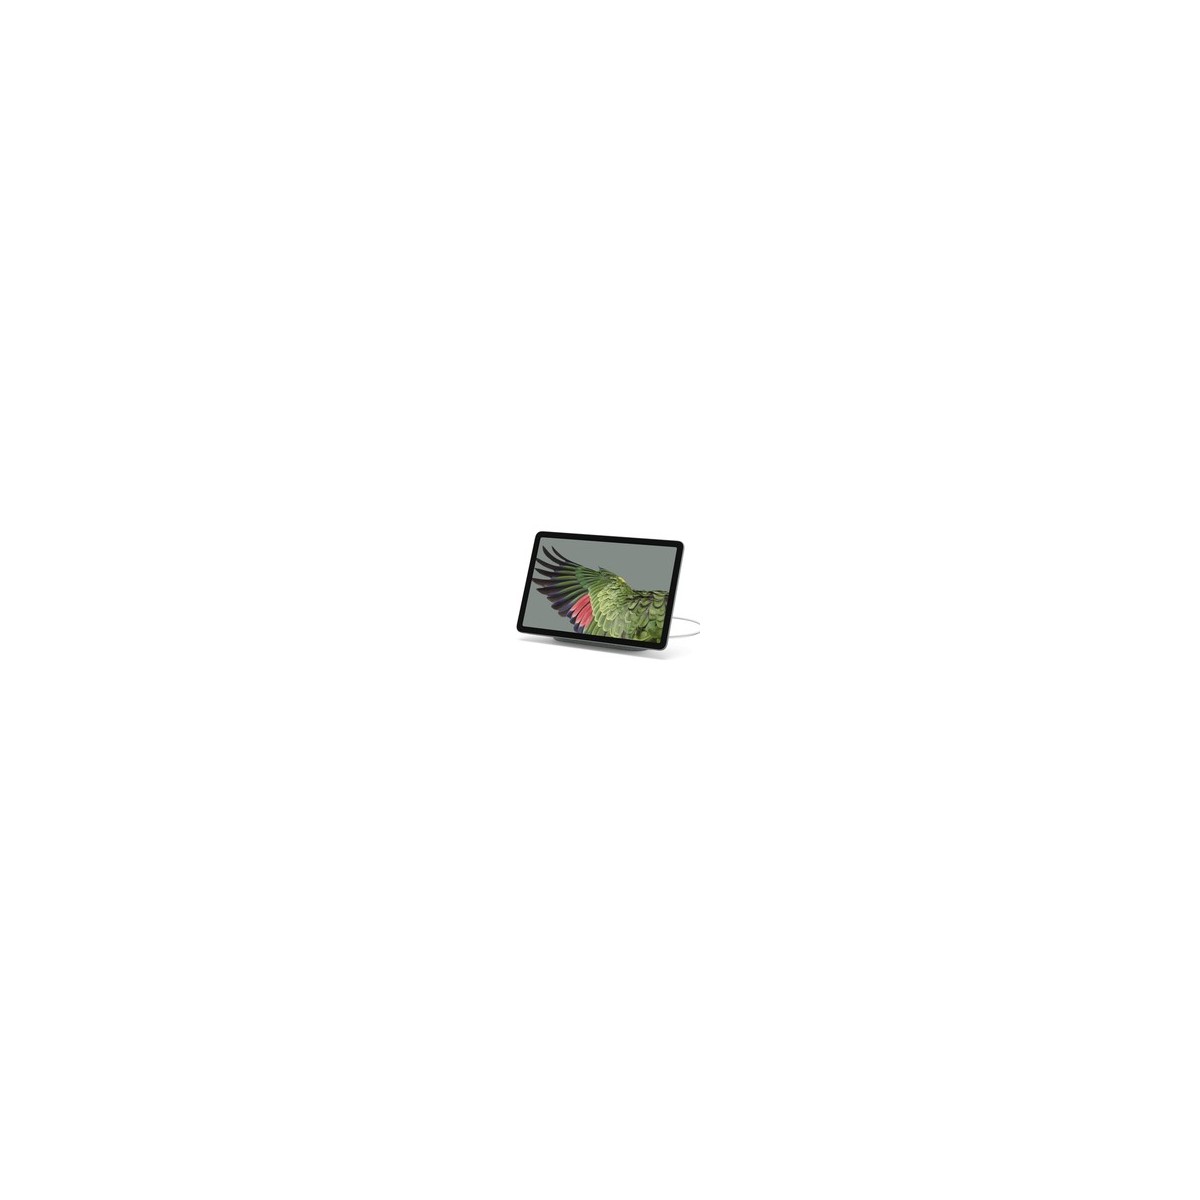 Google Pixel Tablet - 256GB - Haze